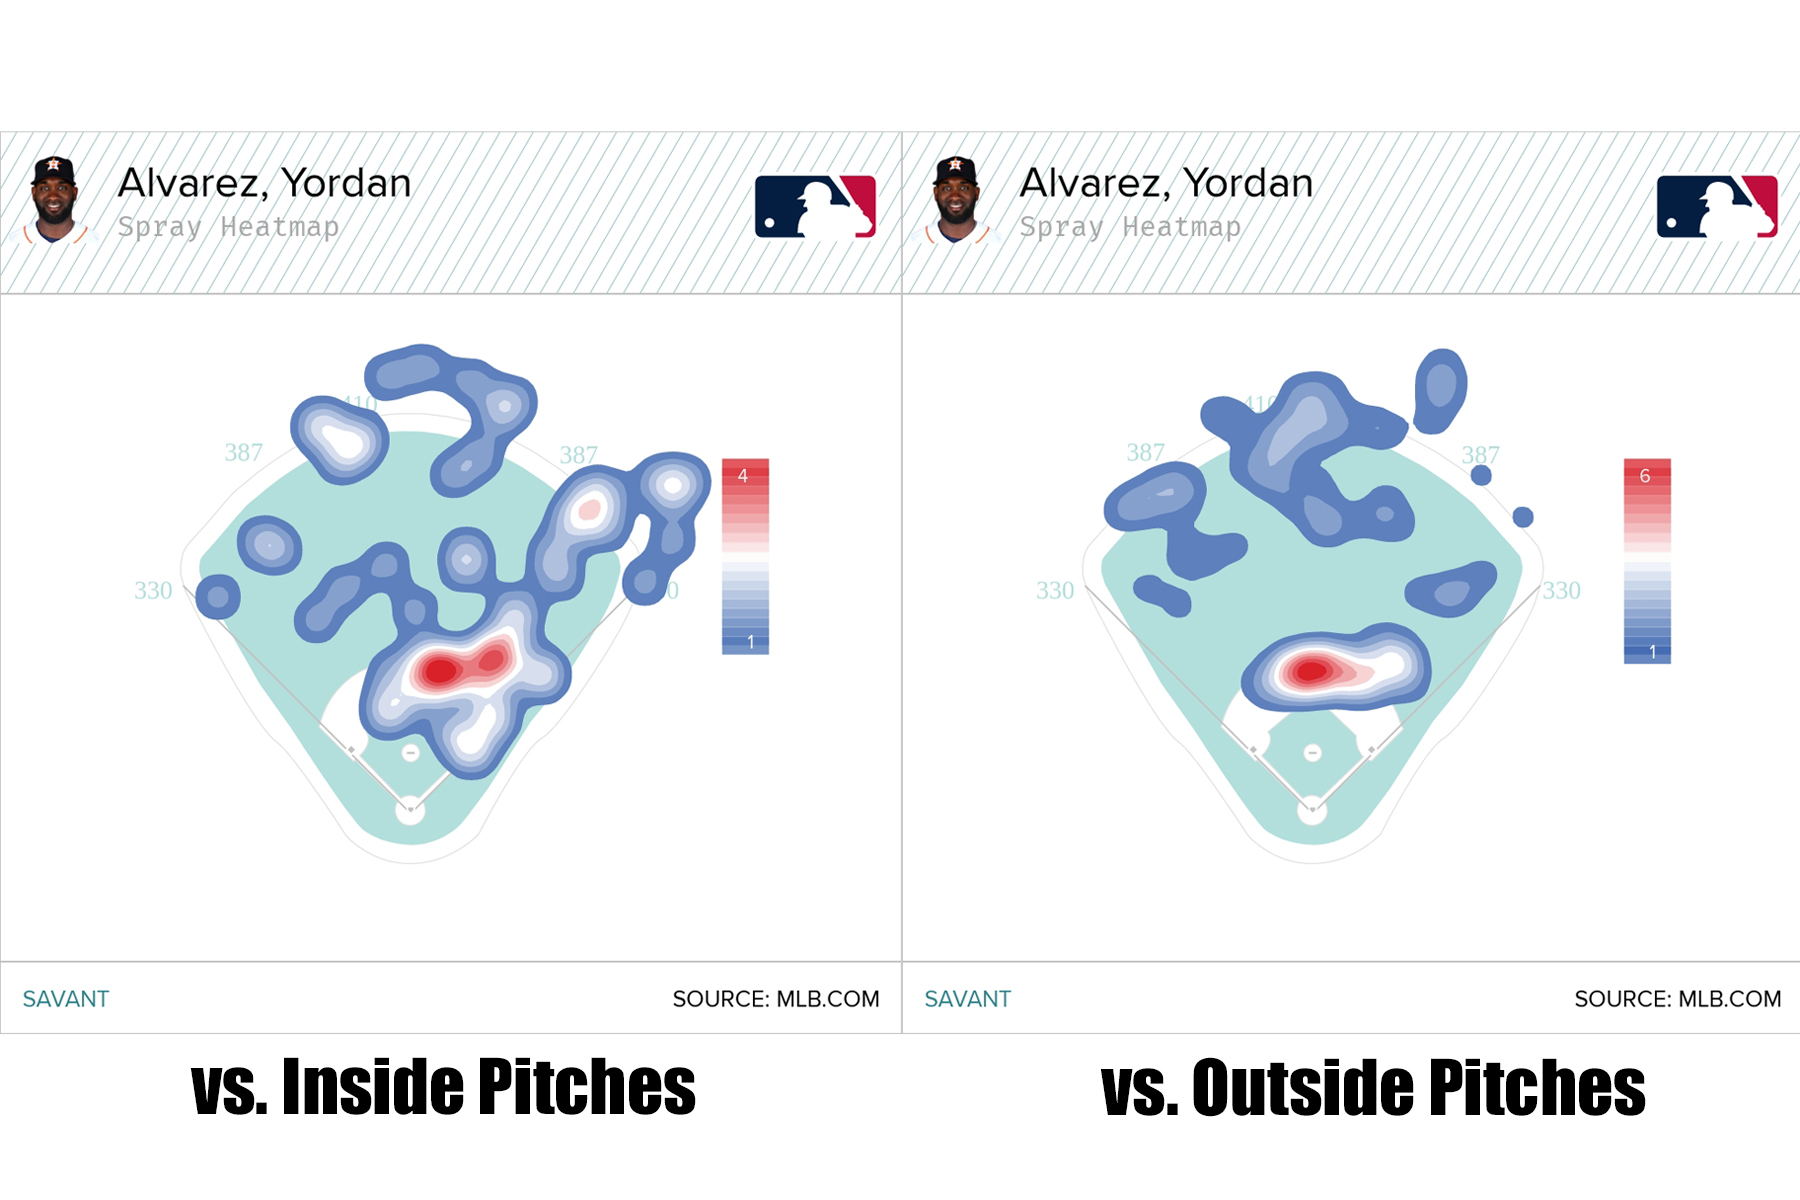 Astros: Yordan Alvarez reaches Aaron Judge territory amid torrid season